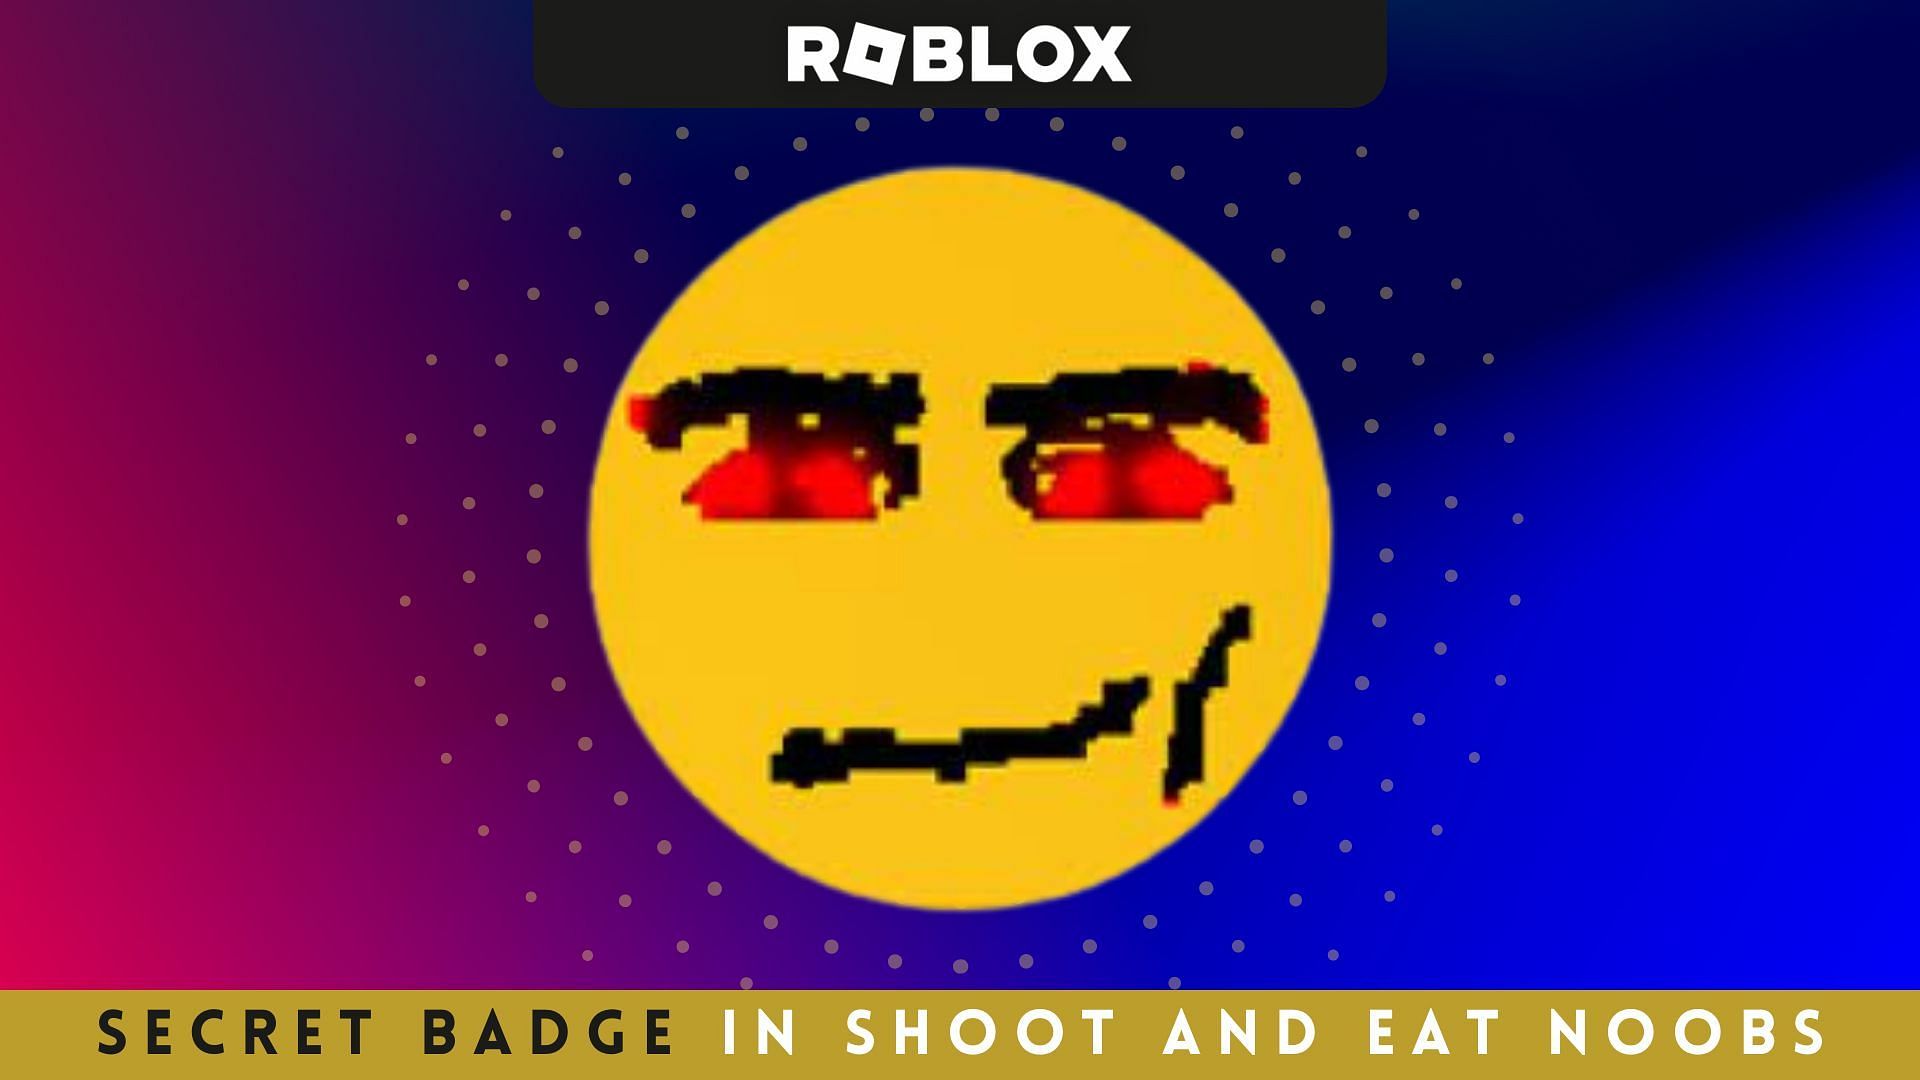 Smiley man - Roblox